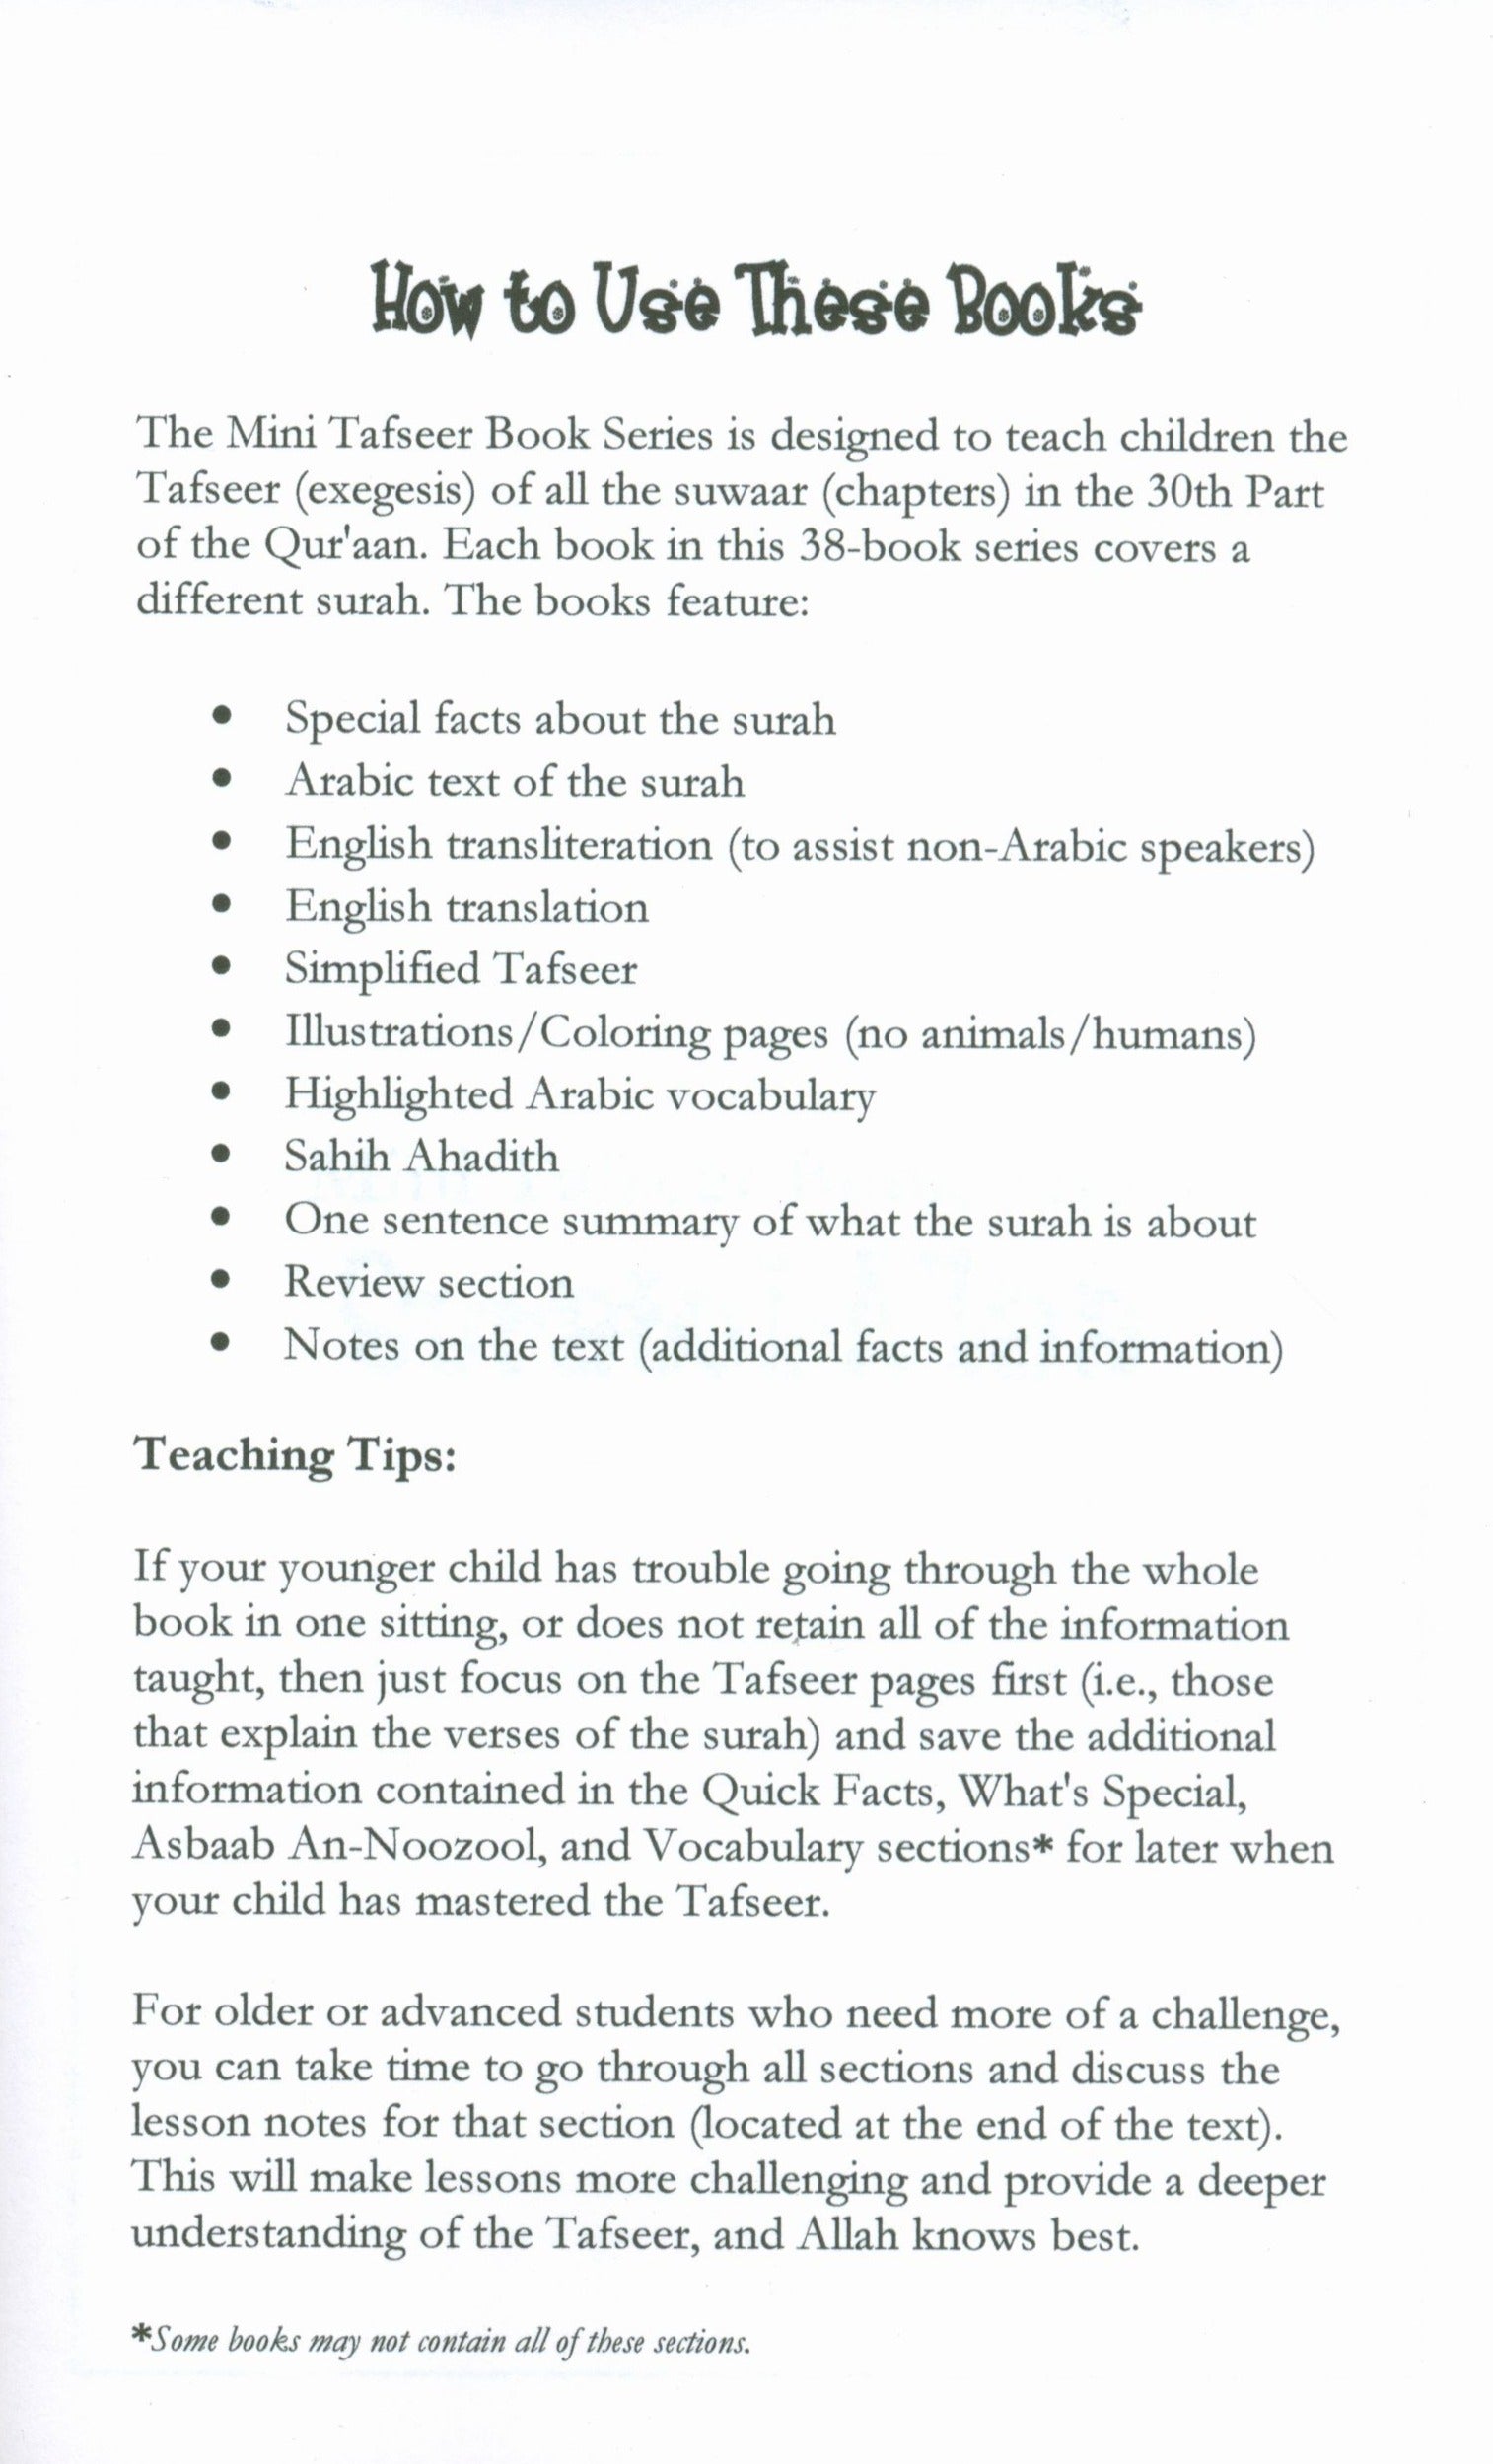 Mini Tafseer Book Suratul A'laa (Surah 87)